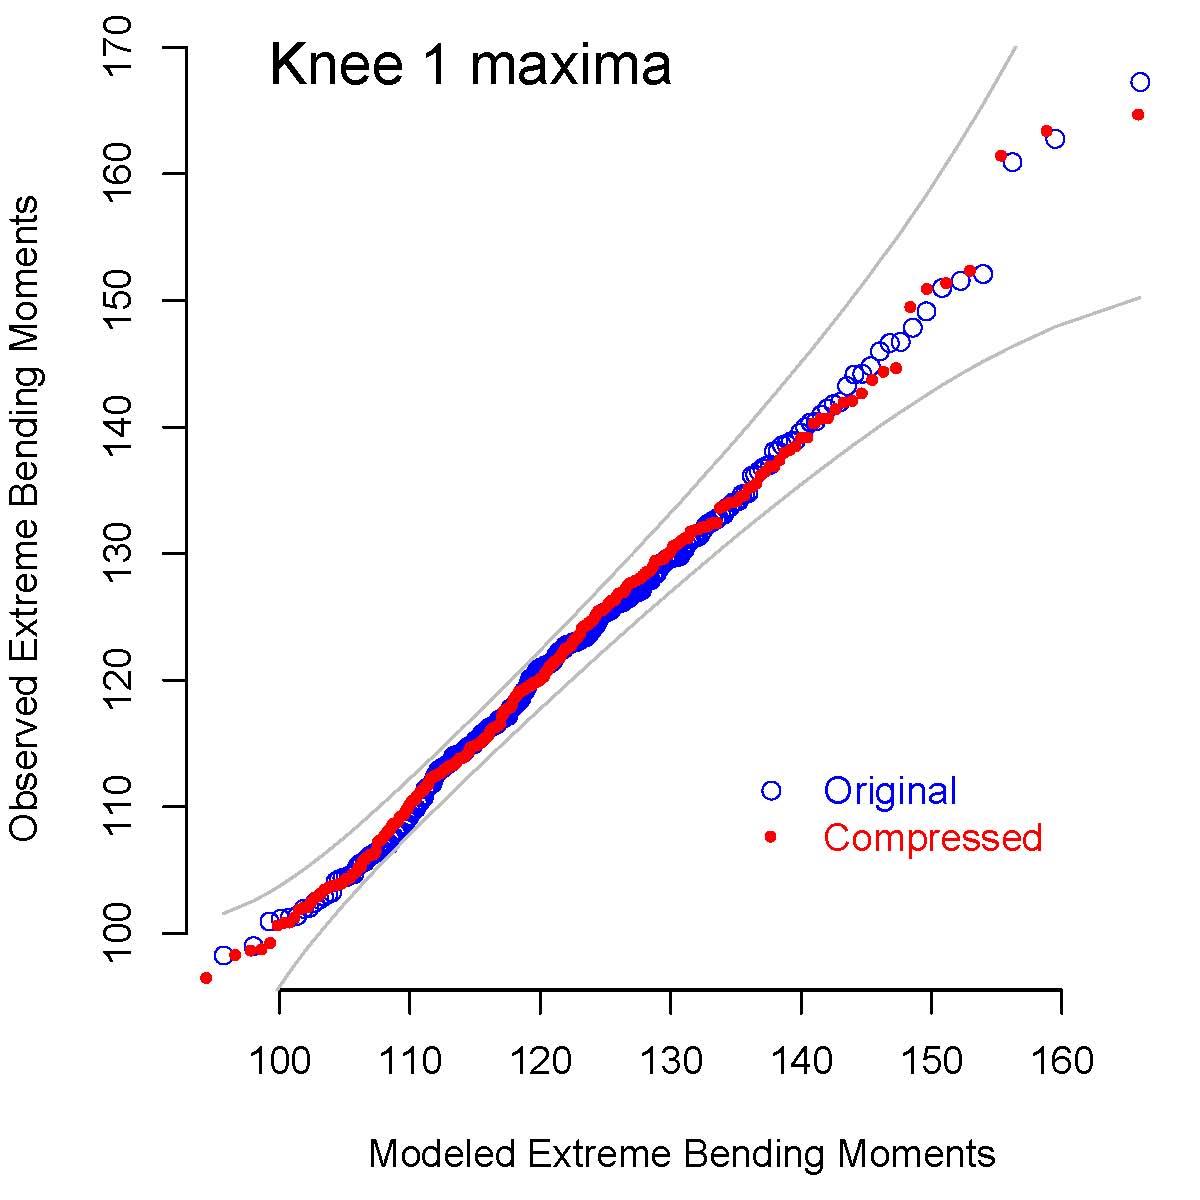 knee1-20min-max-gev